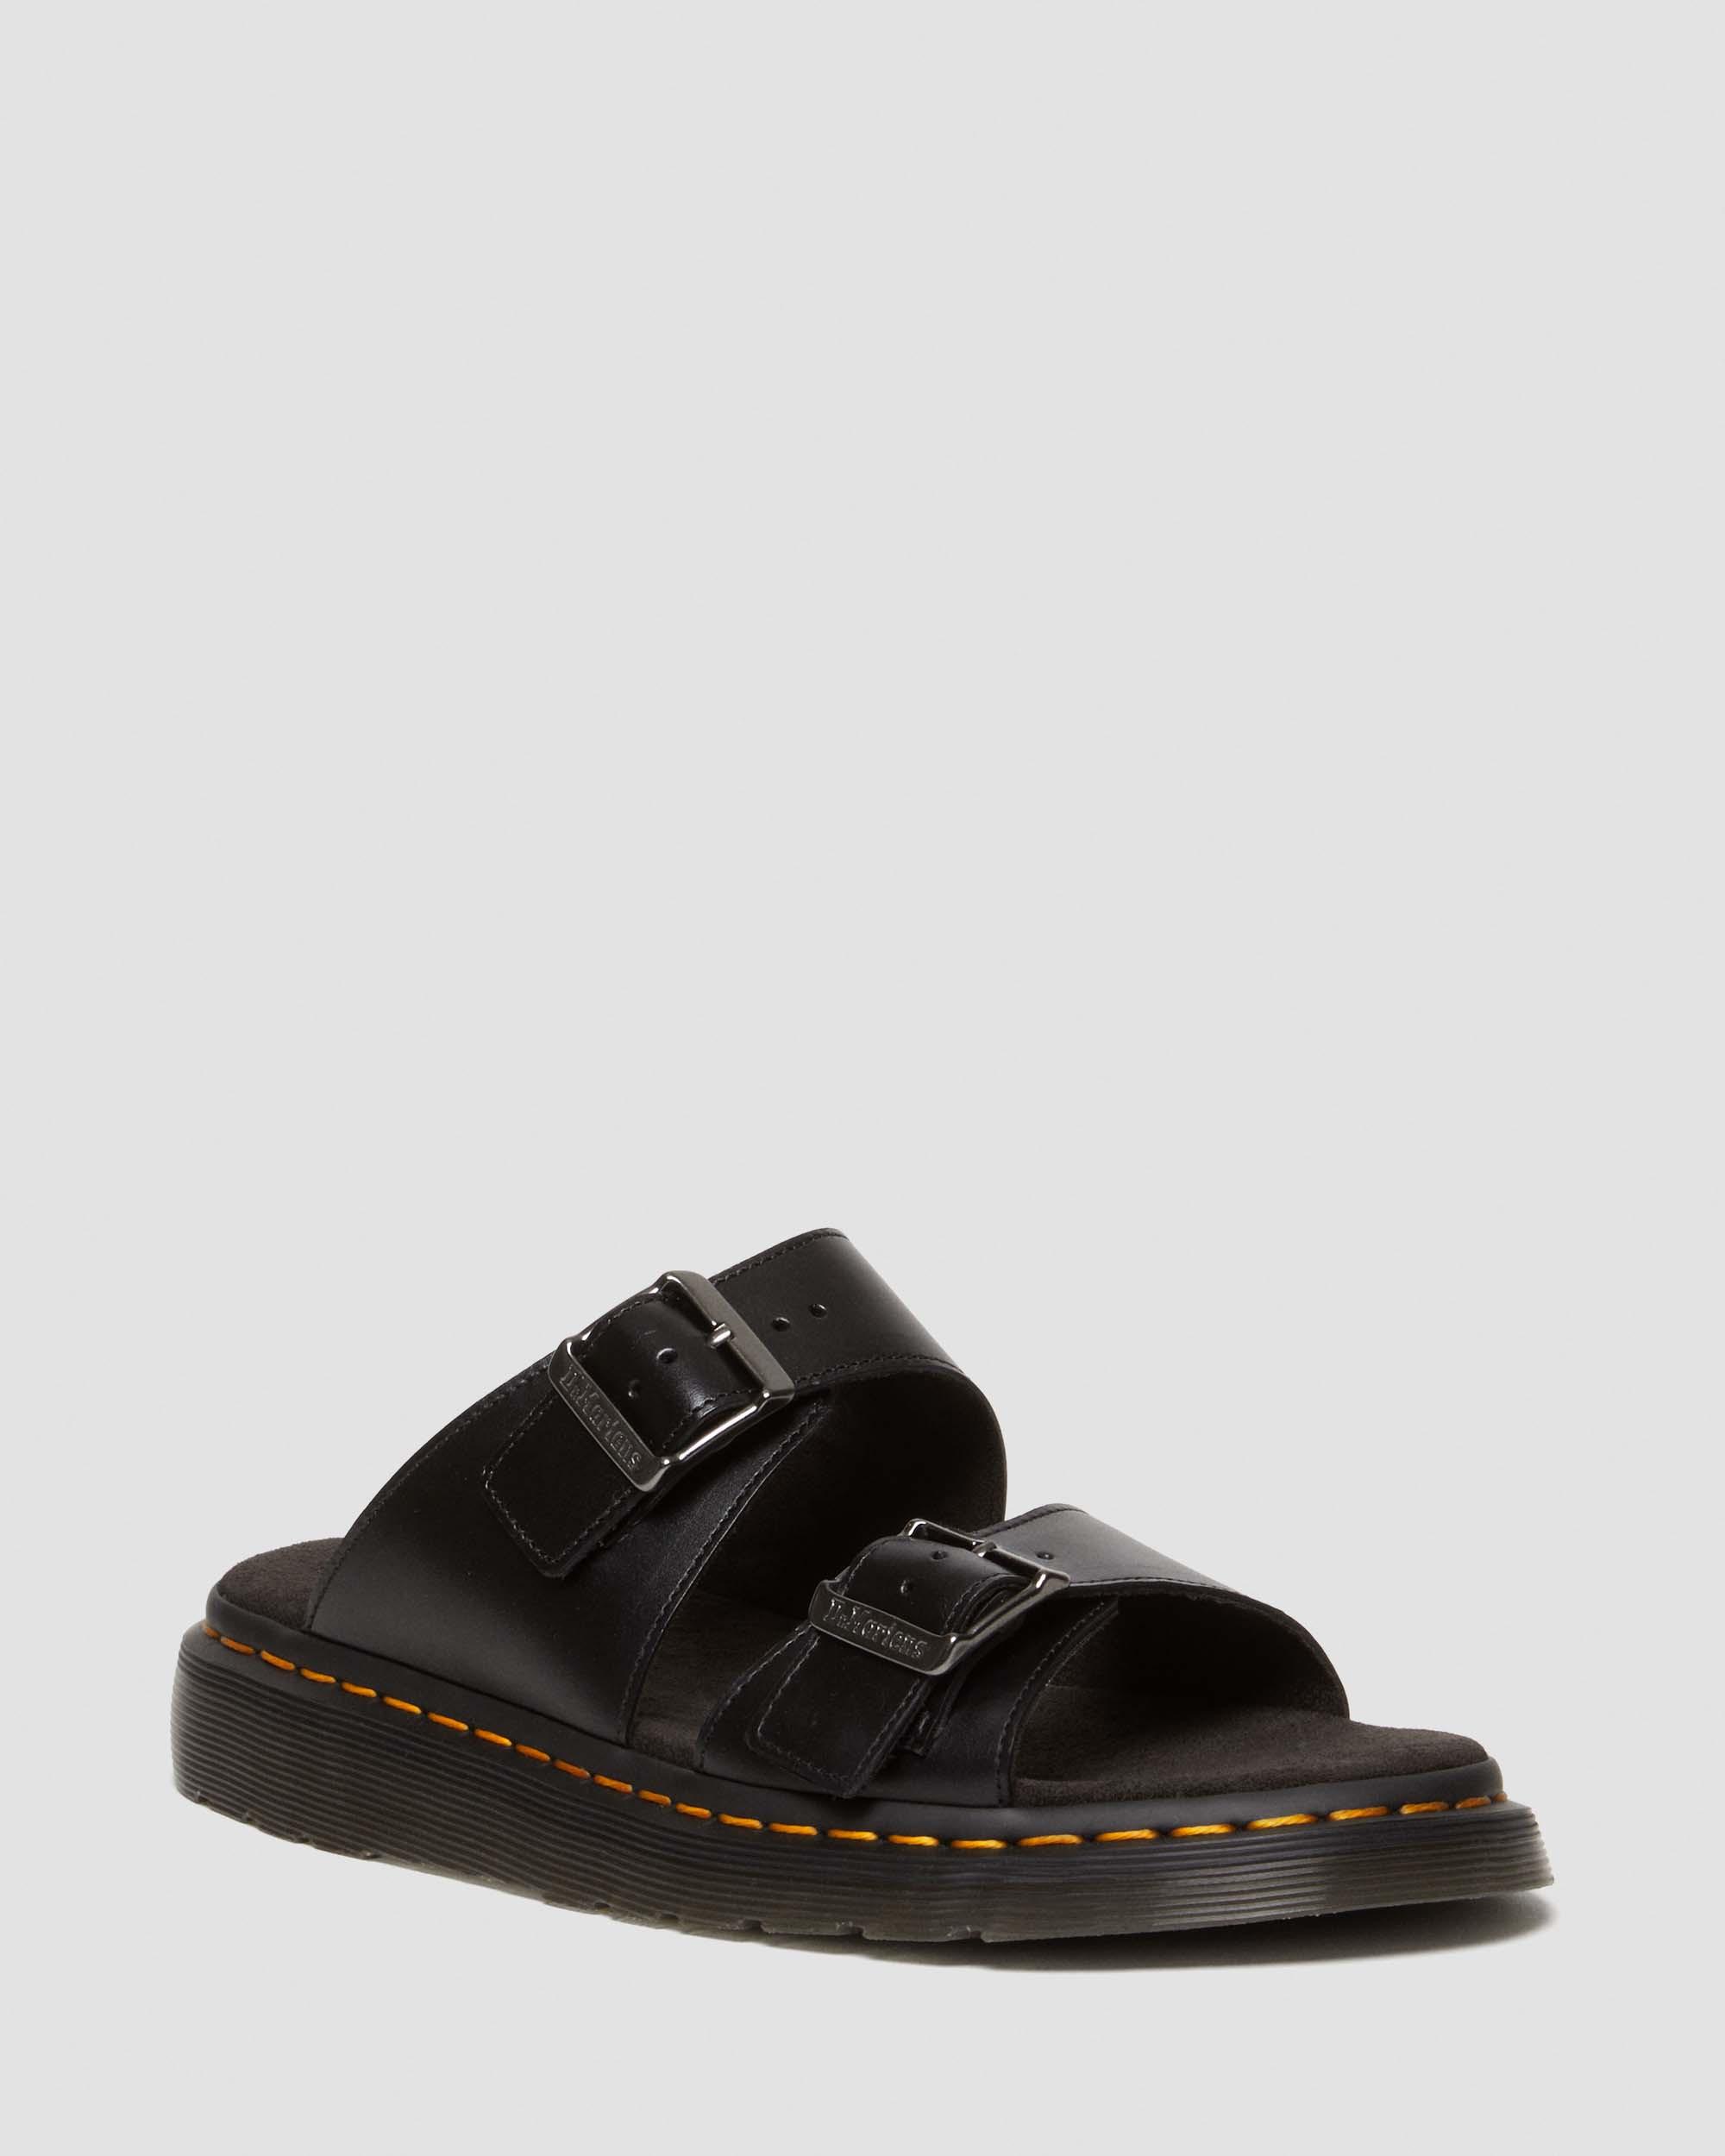 Josef Analine Leather Buckle Slide Sandals